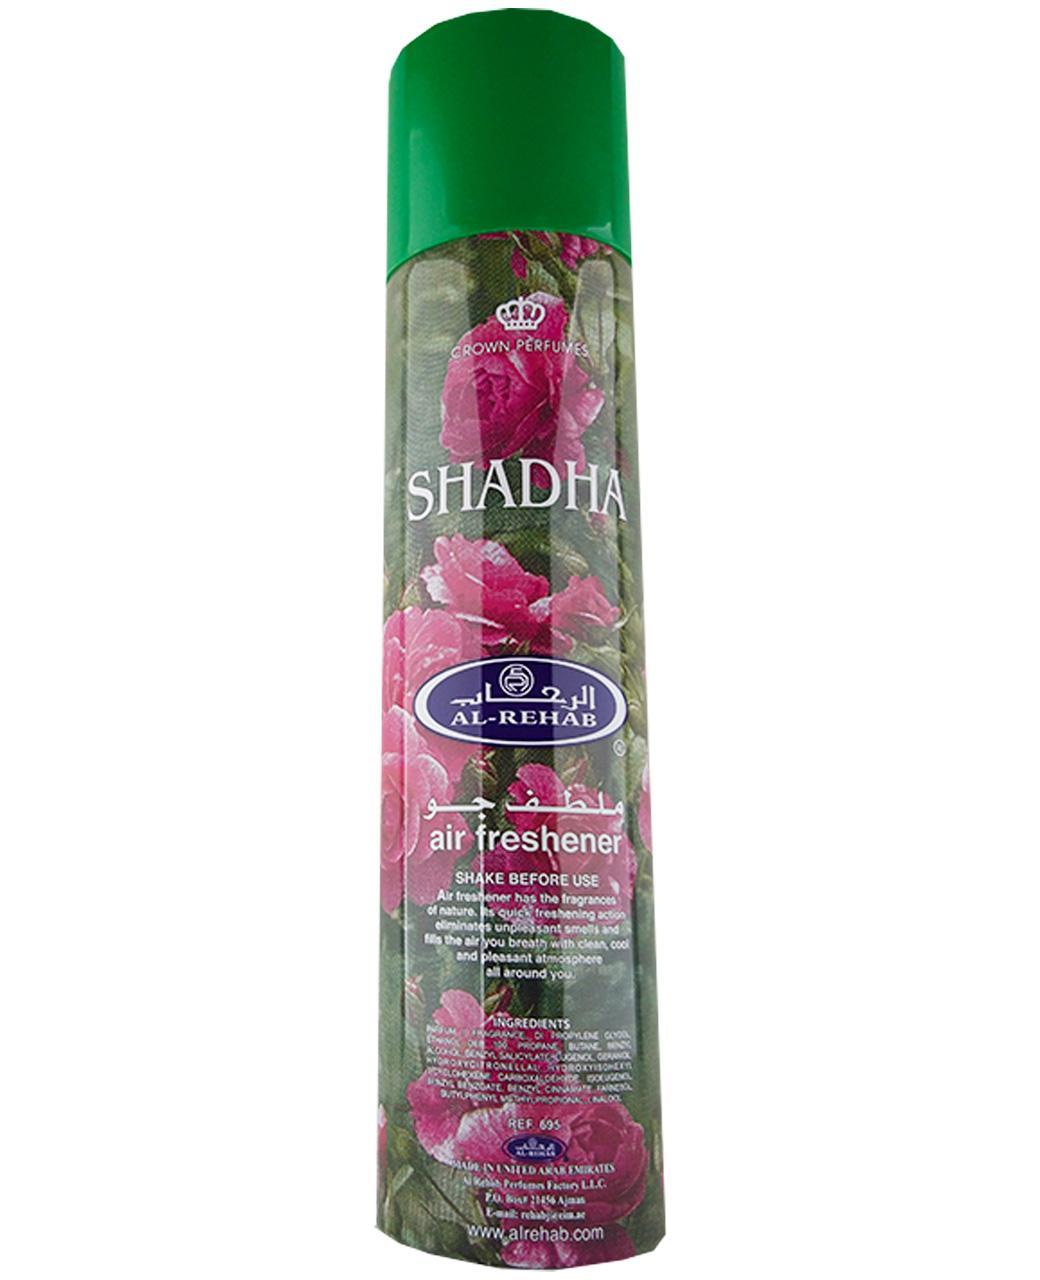 Shadha 300ml Air Freshener by Al-Rehab